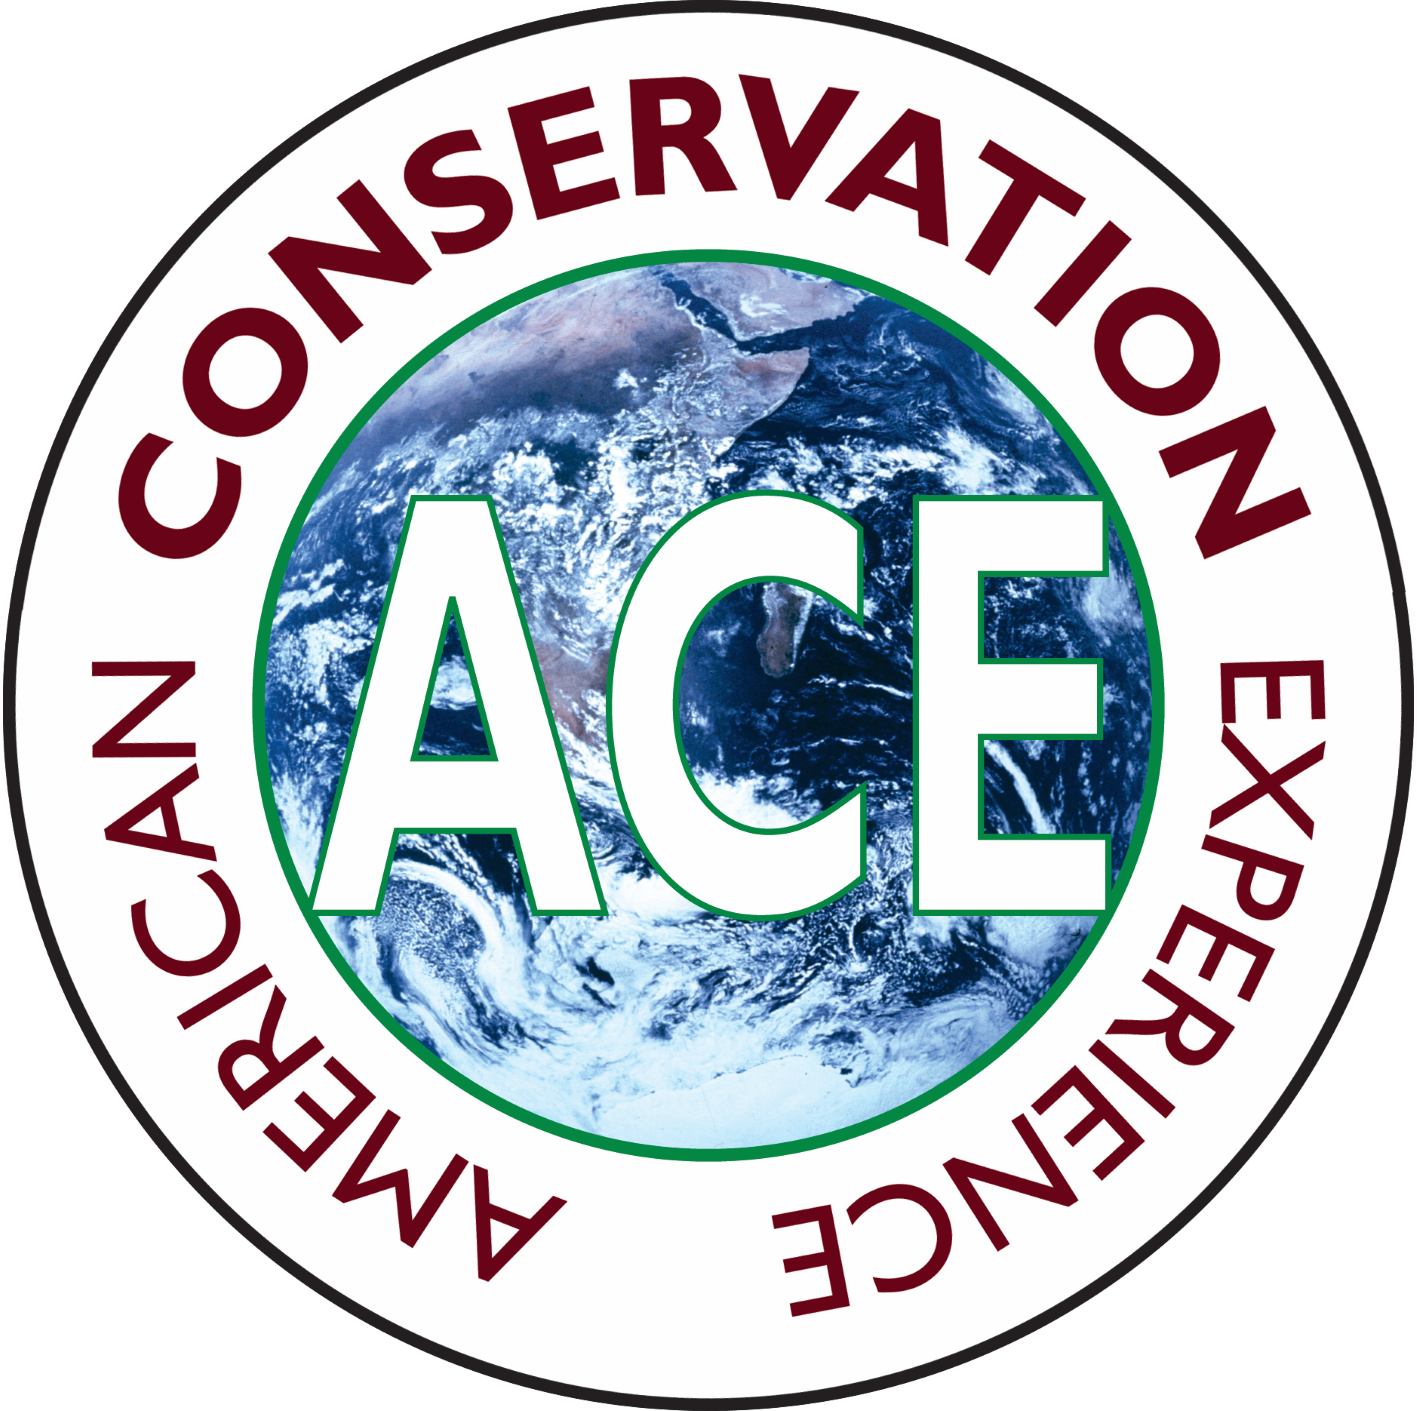 USA Conservation